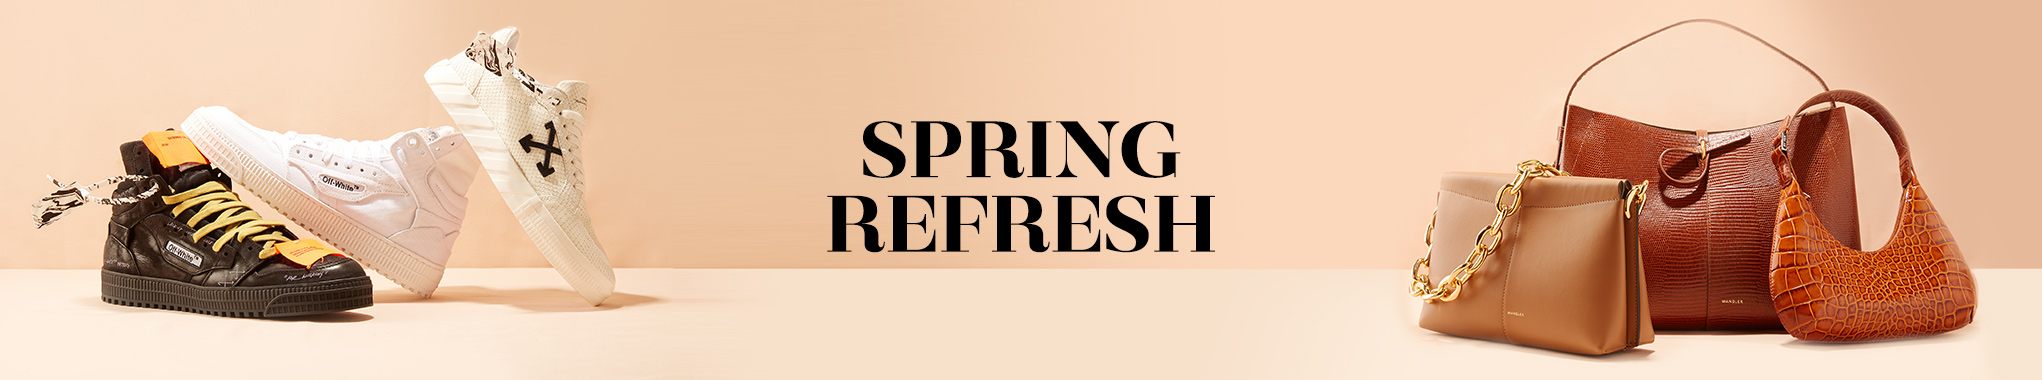 Spring Refresh - Banner - Desktop